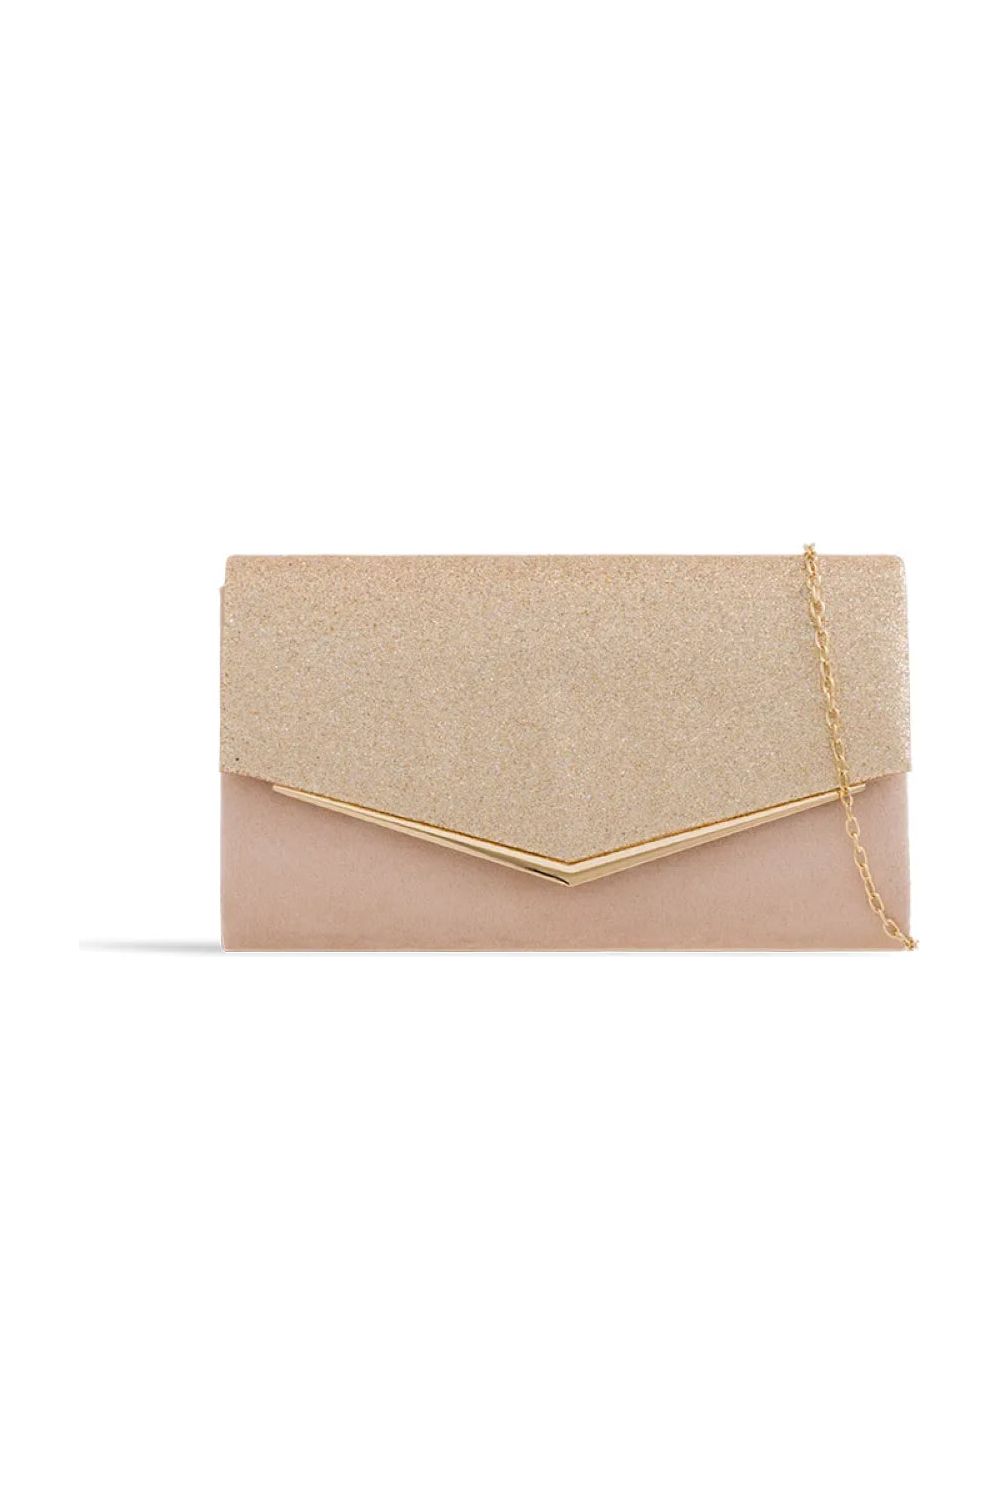 Nude Blush Glitter Envelope Clutch Bag ALH2348